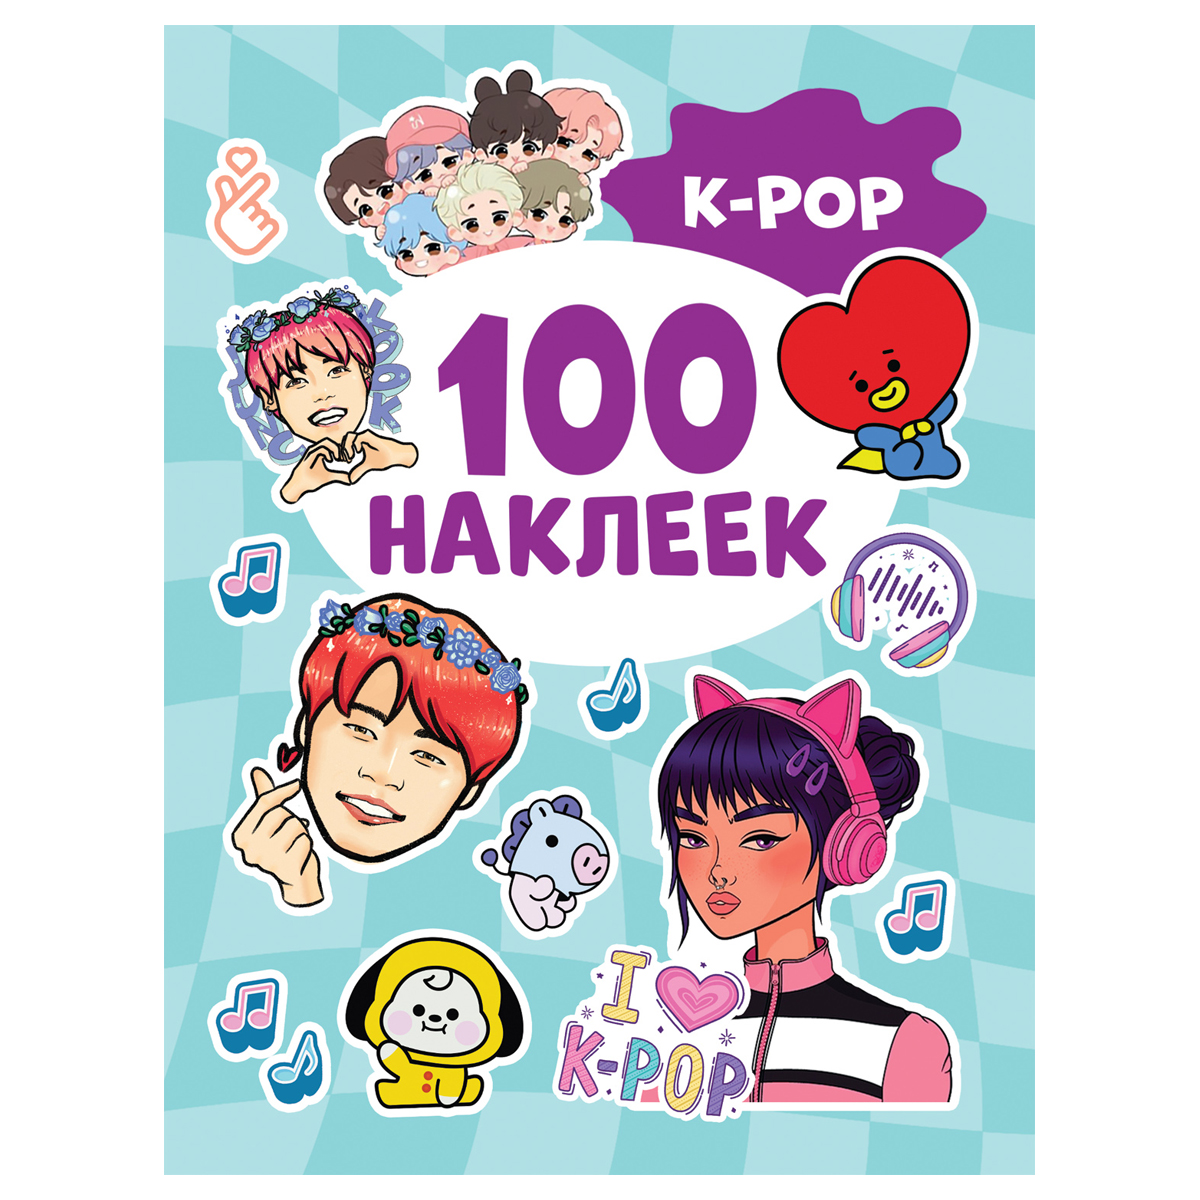     "K-pop", 5, 100.